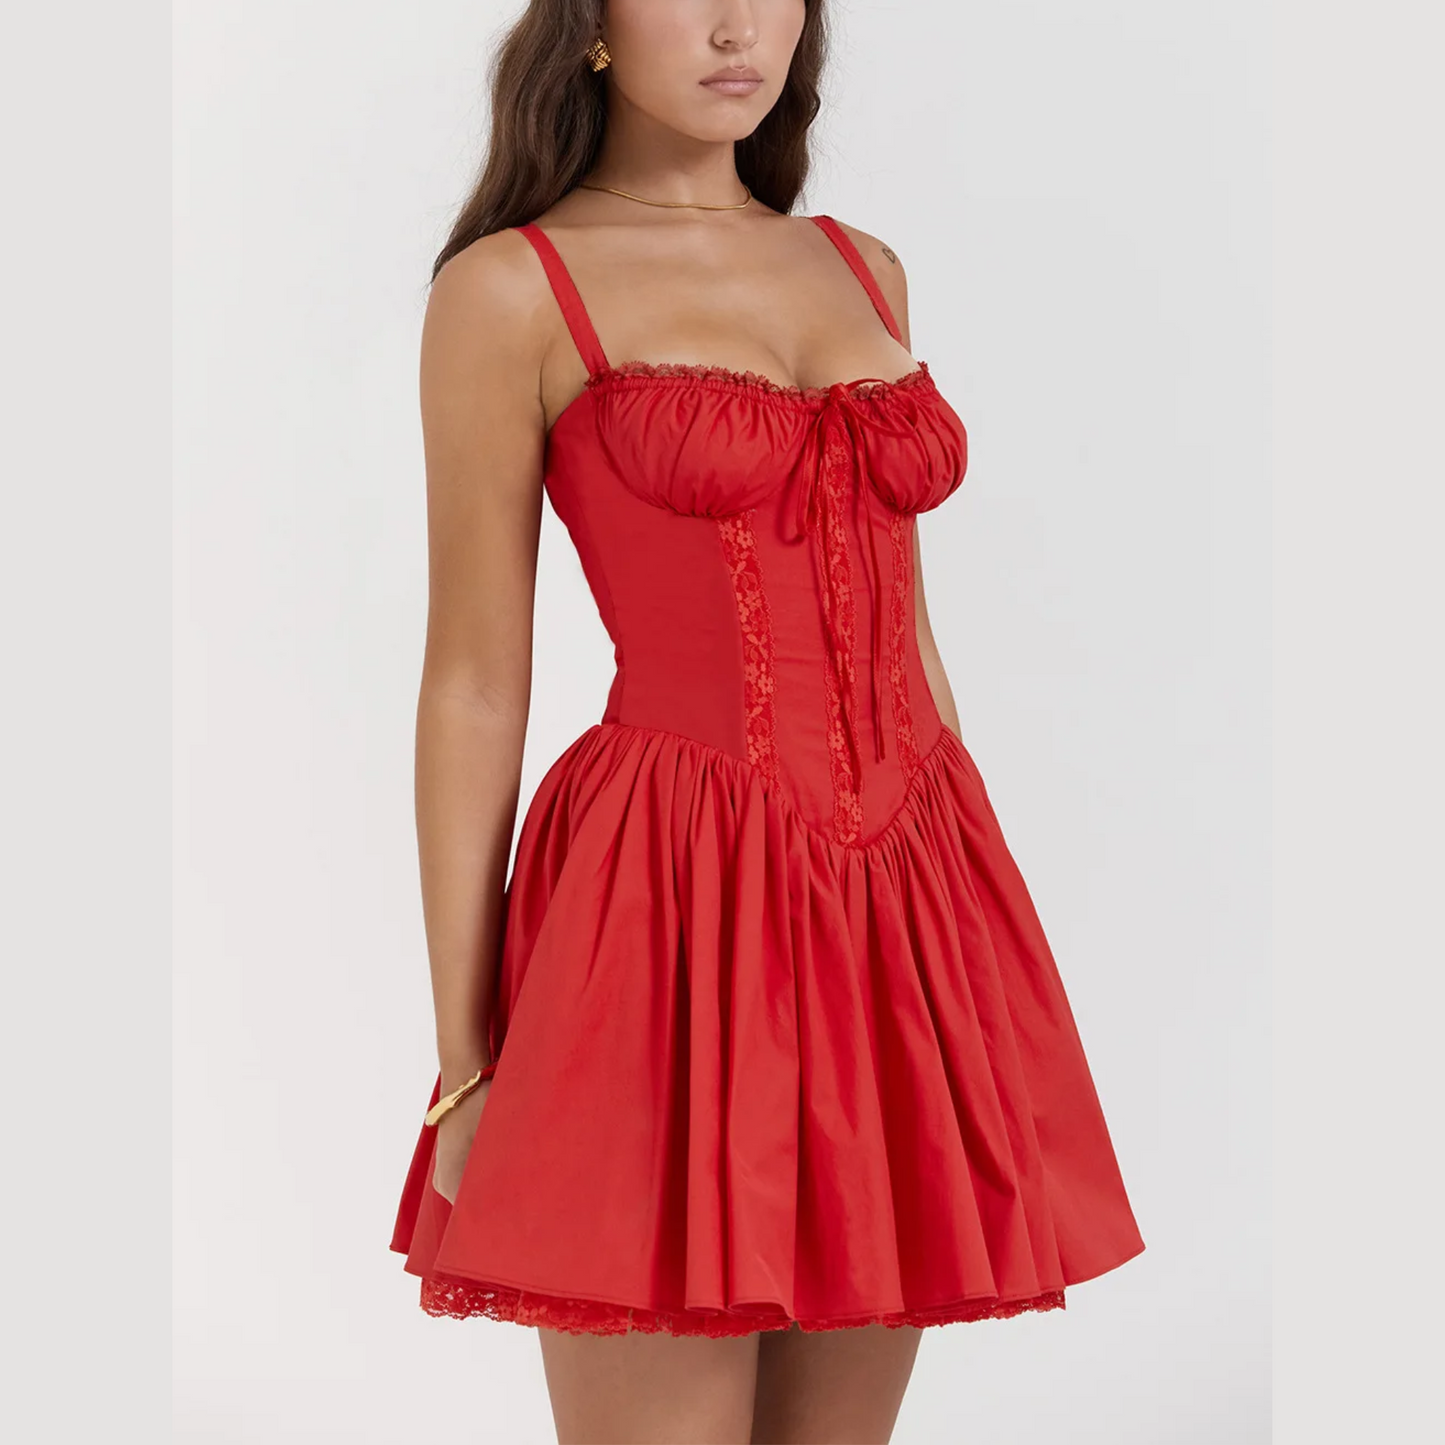 Sade - Red A-Line Lace Up Mini Dress